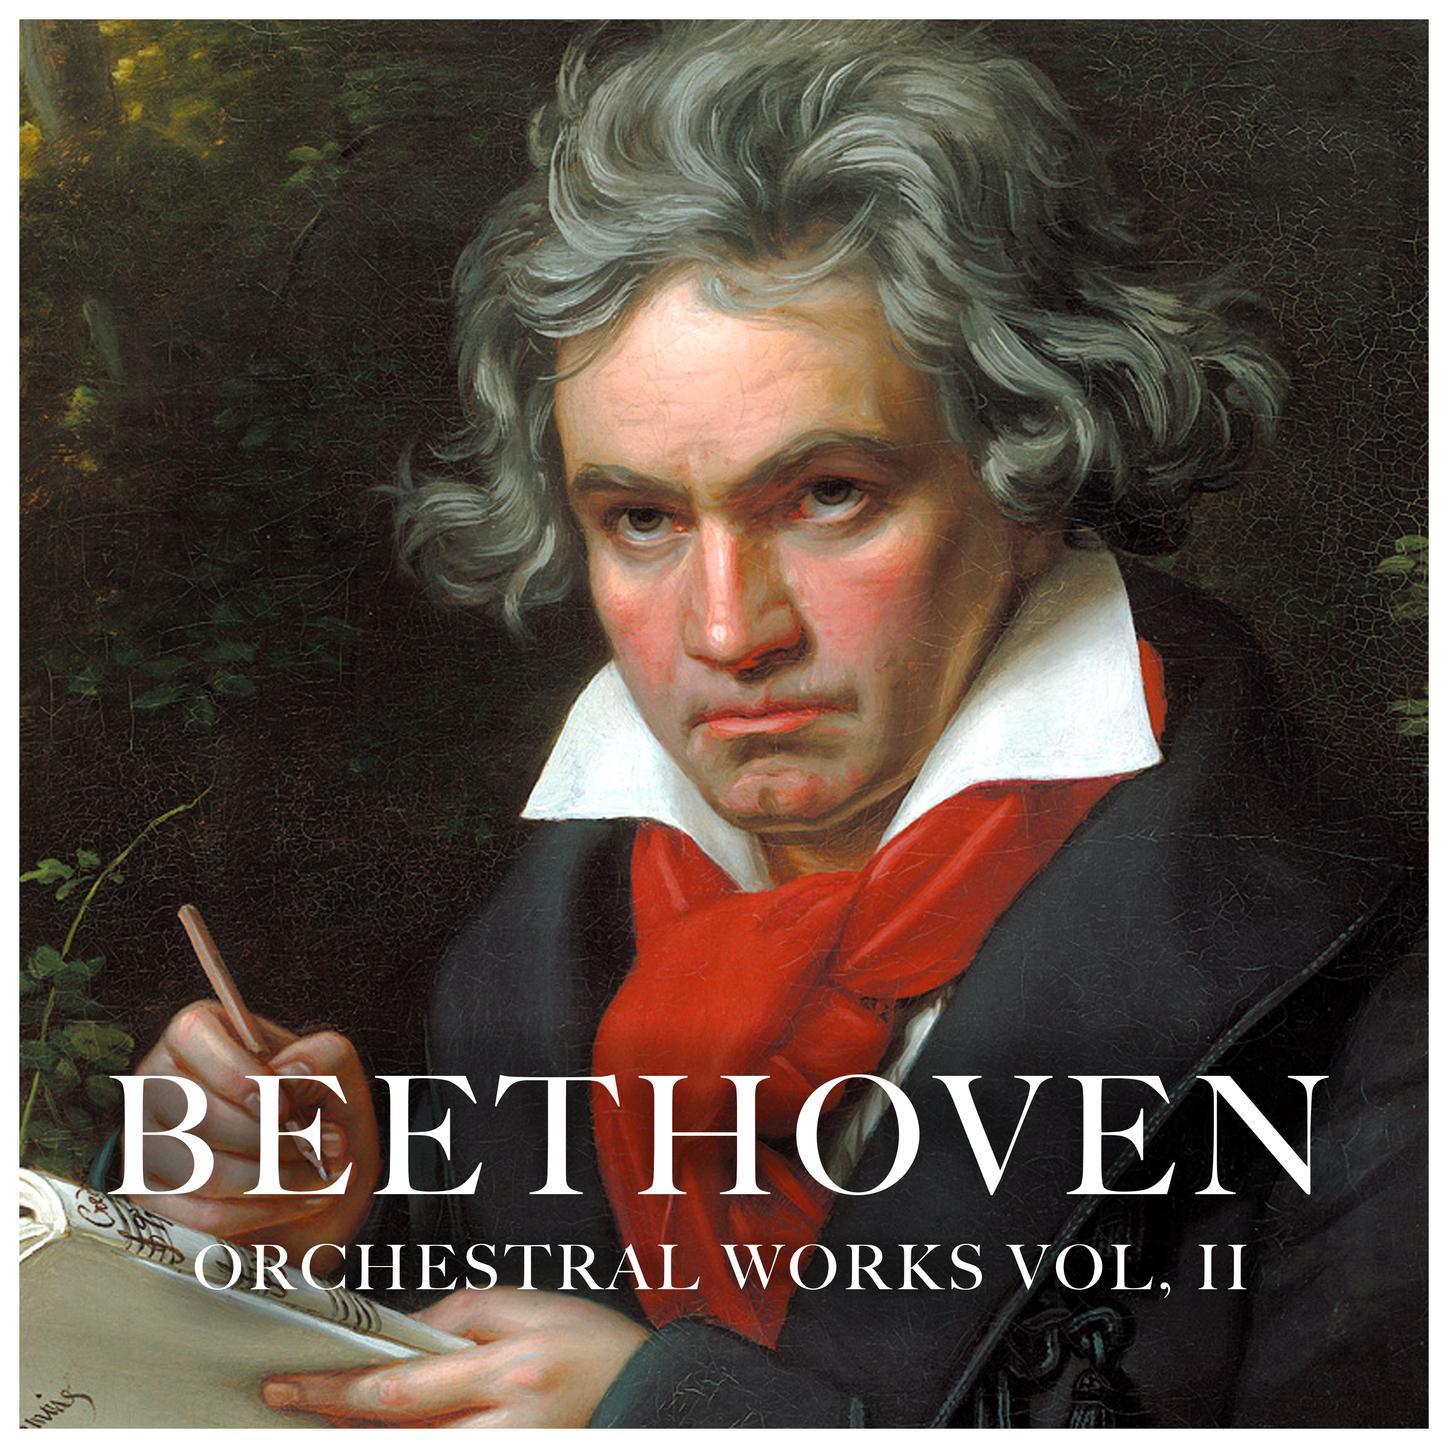 Beethoven Orchestral Works Vol, 2